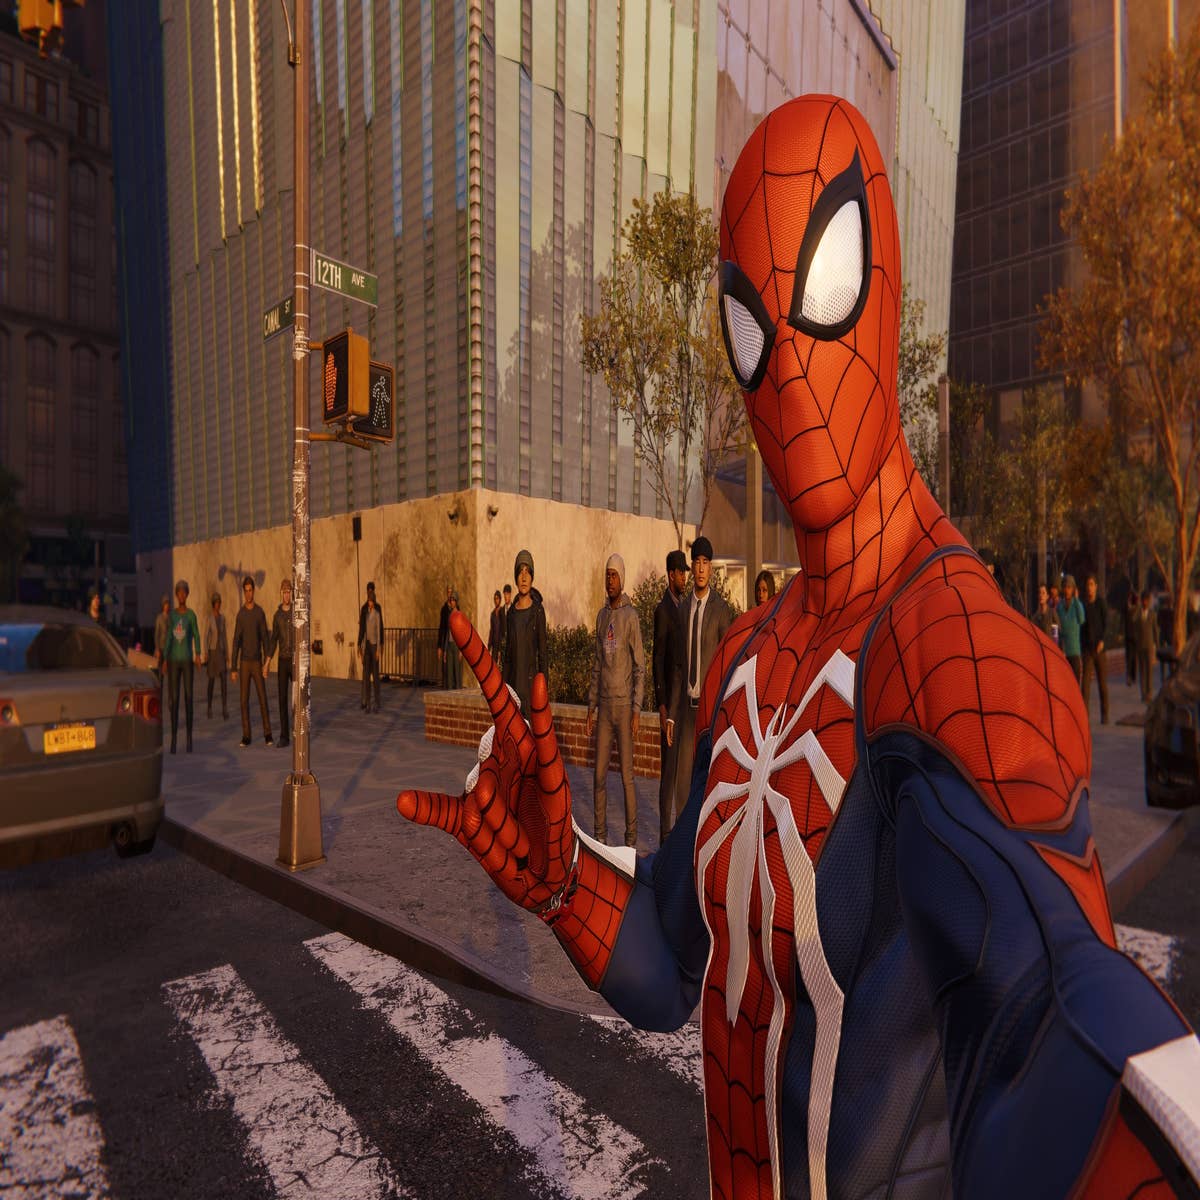 The Amazing Spider-Man (handheld video game)